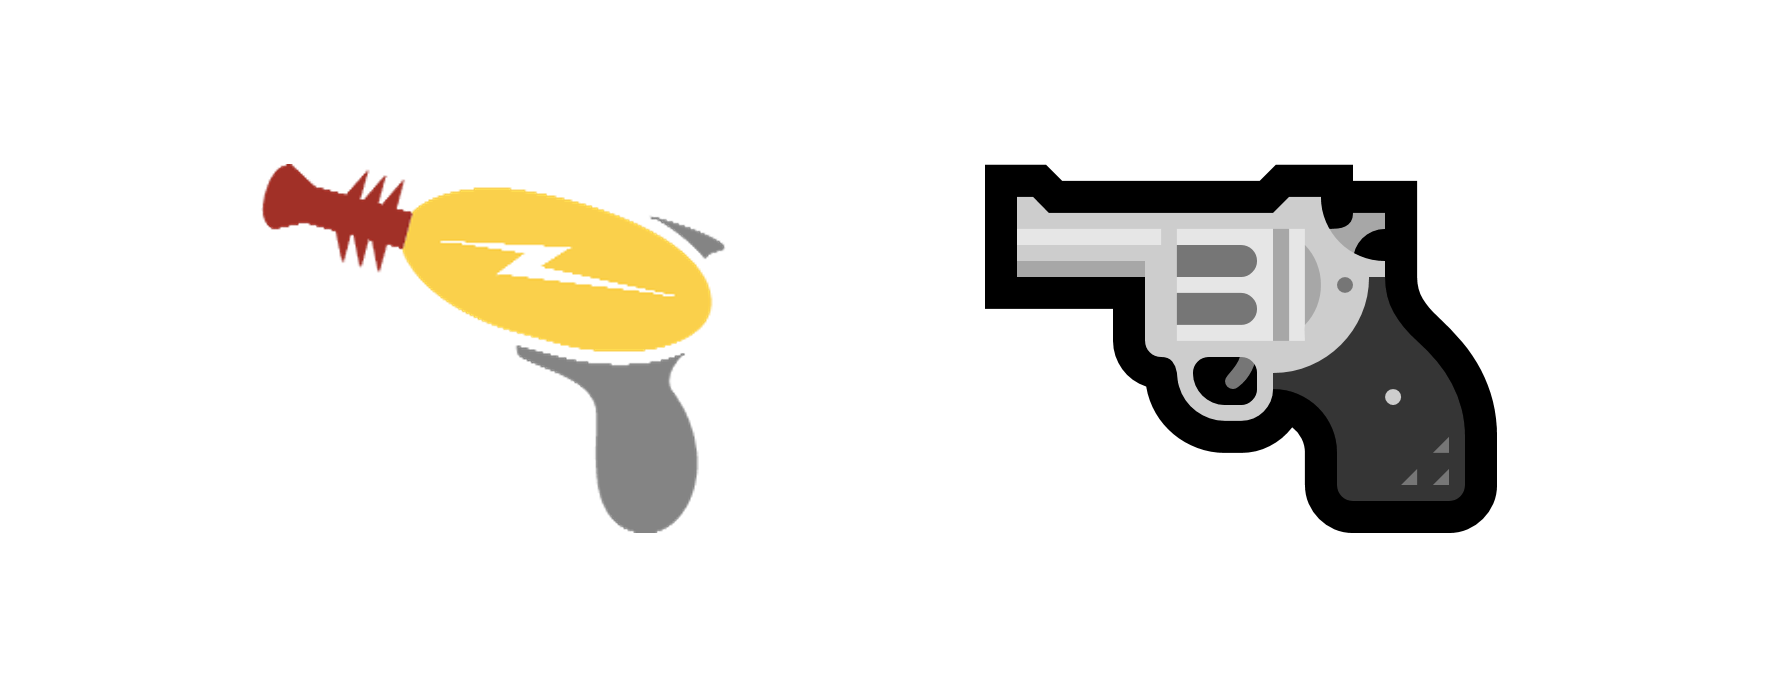 Left: The Windows 8.1 gun emoji. Right: The new WIndows 10 gun